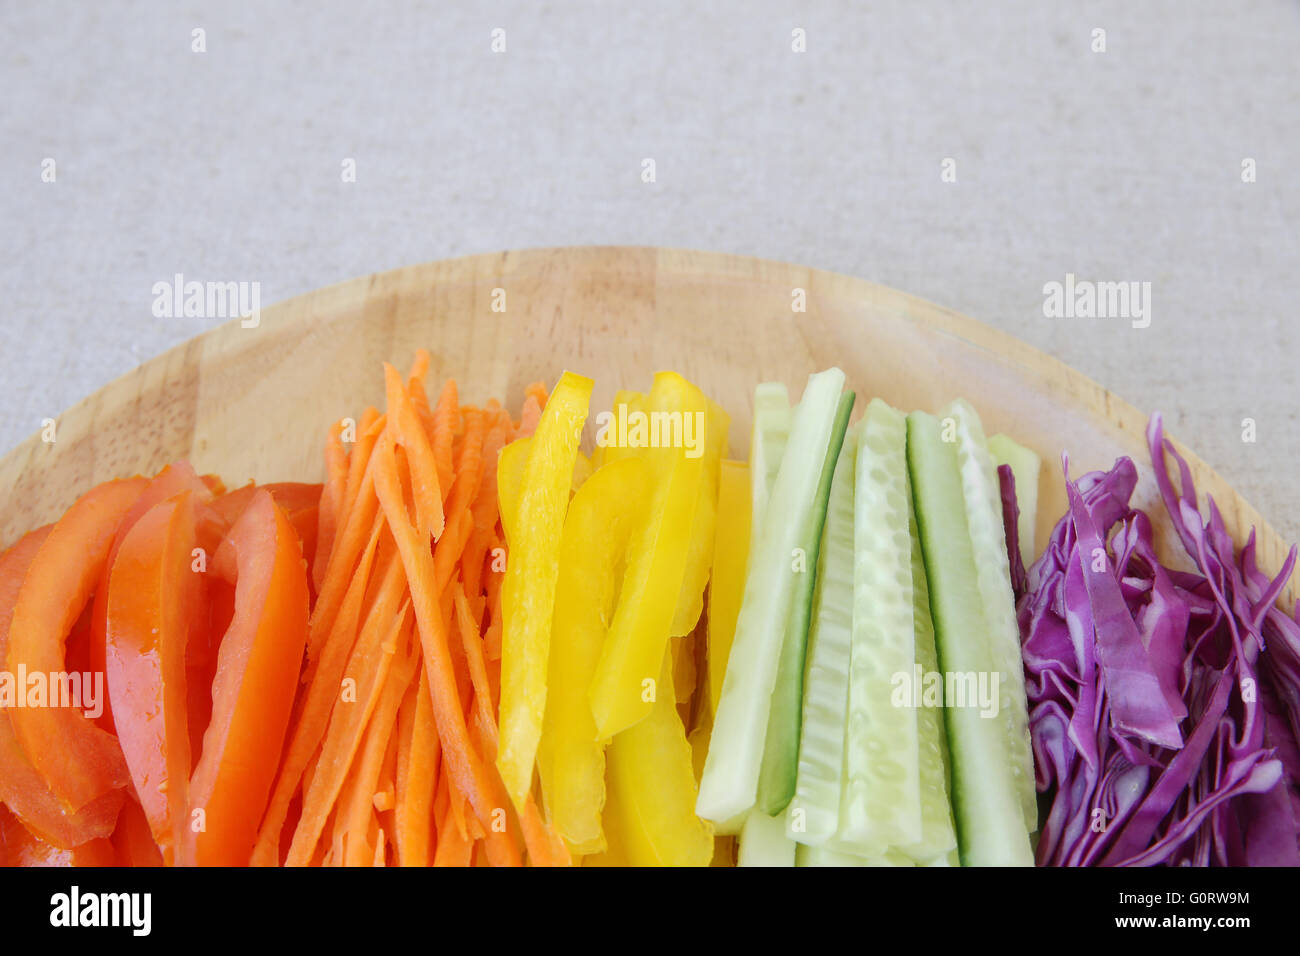 Gehen, Rainbow Blattsalat auf Holzplatte, selektiven Fokus Kopie Raum Hintergrund Stockfoto